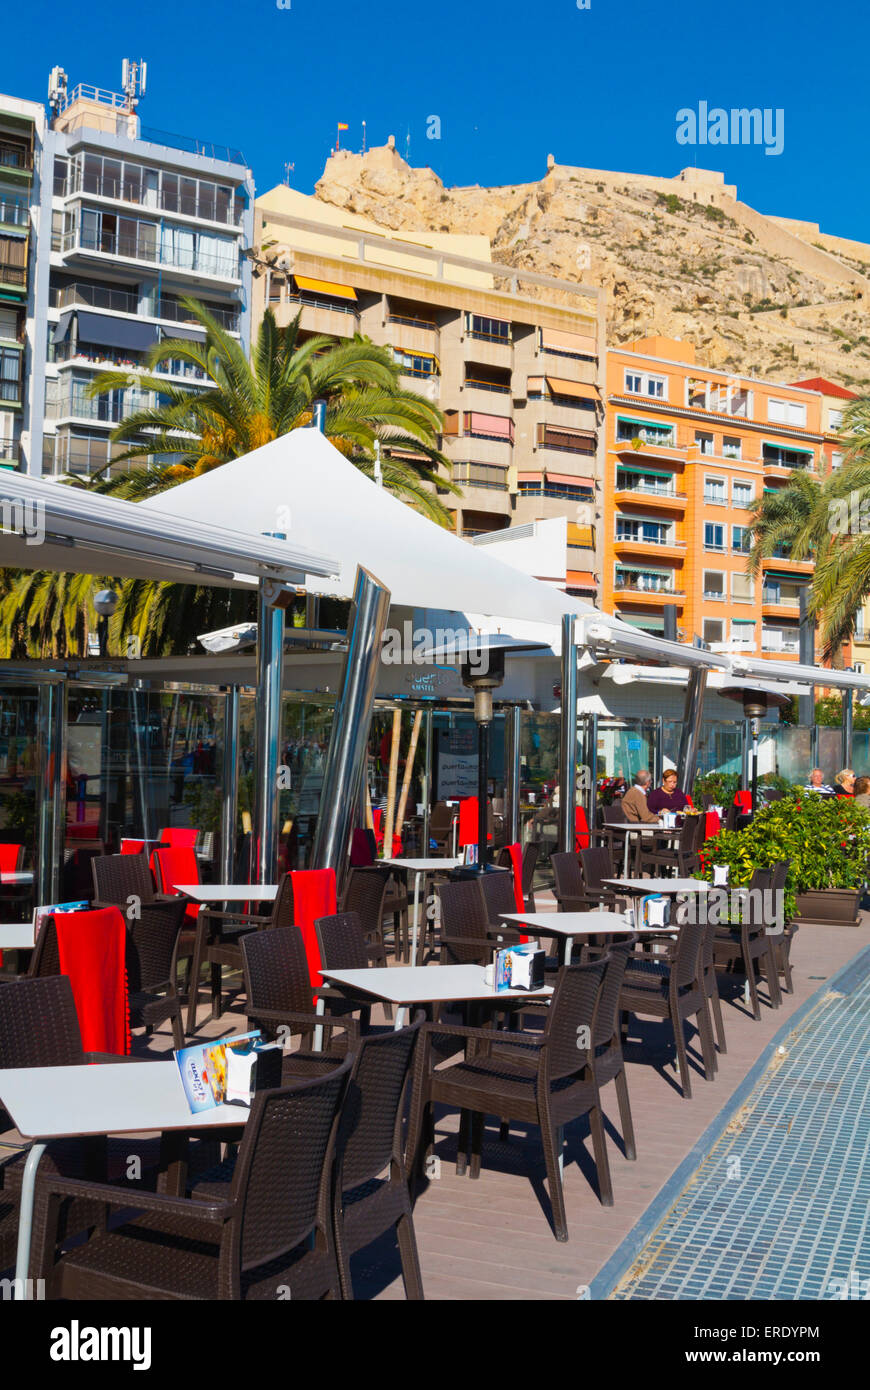 Spain street view restaurant fotografías e imágenes de alta resolución -  Alamy